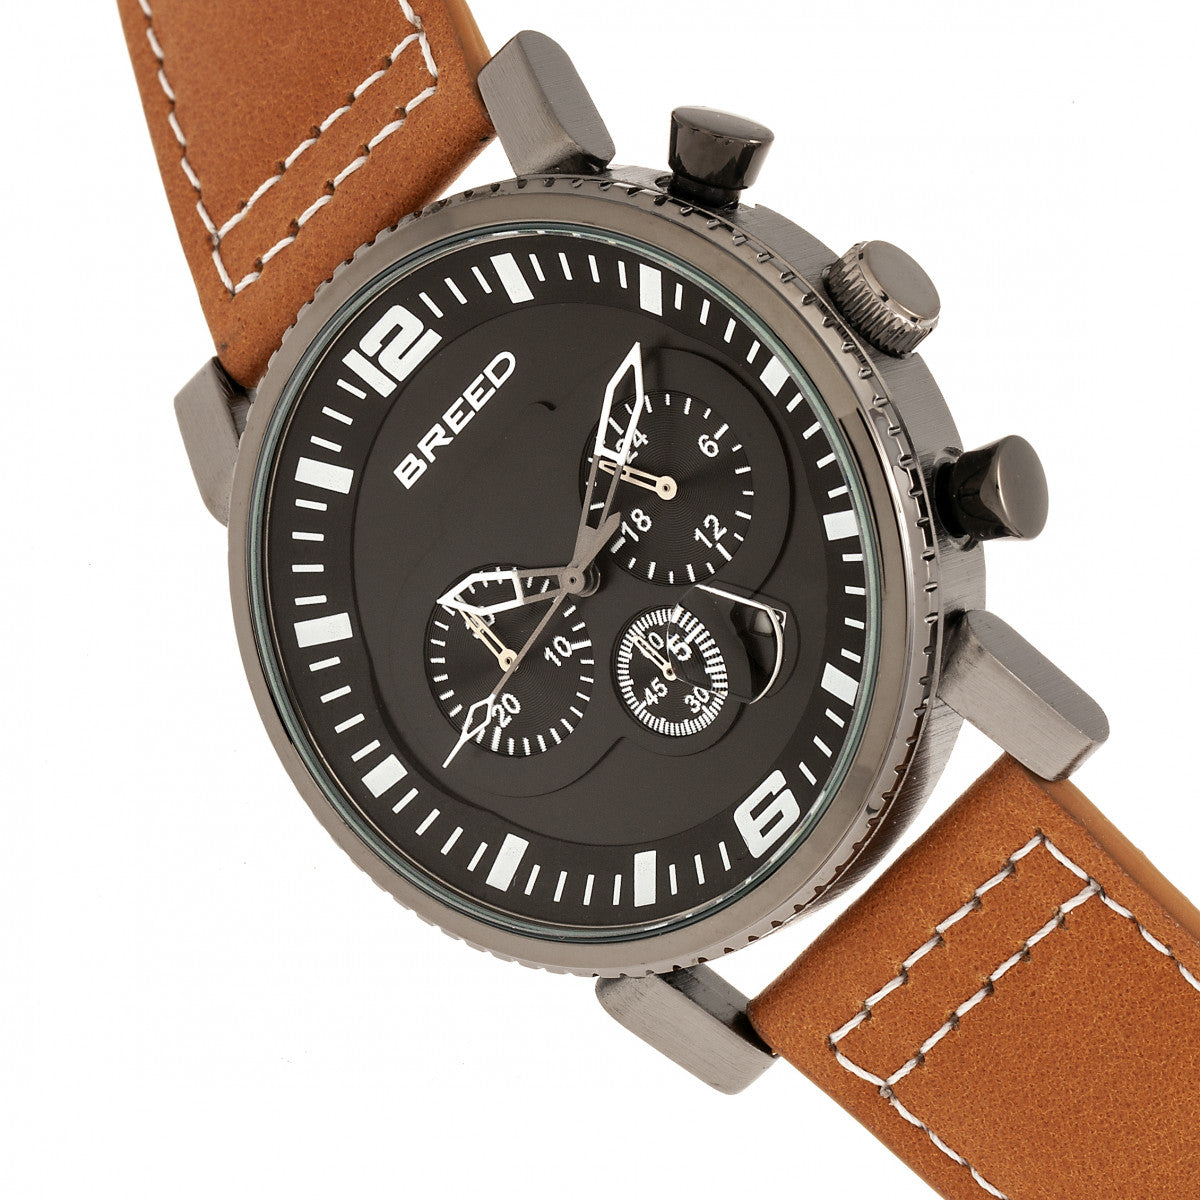 Breed Ryker Chronograph Leather-Band Watch w/Date - Camel/Gunmetal - BRD8204